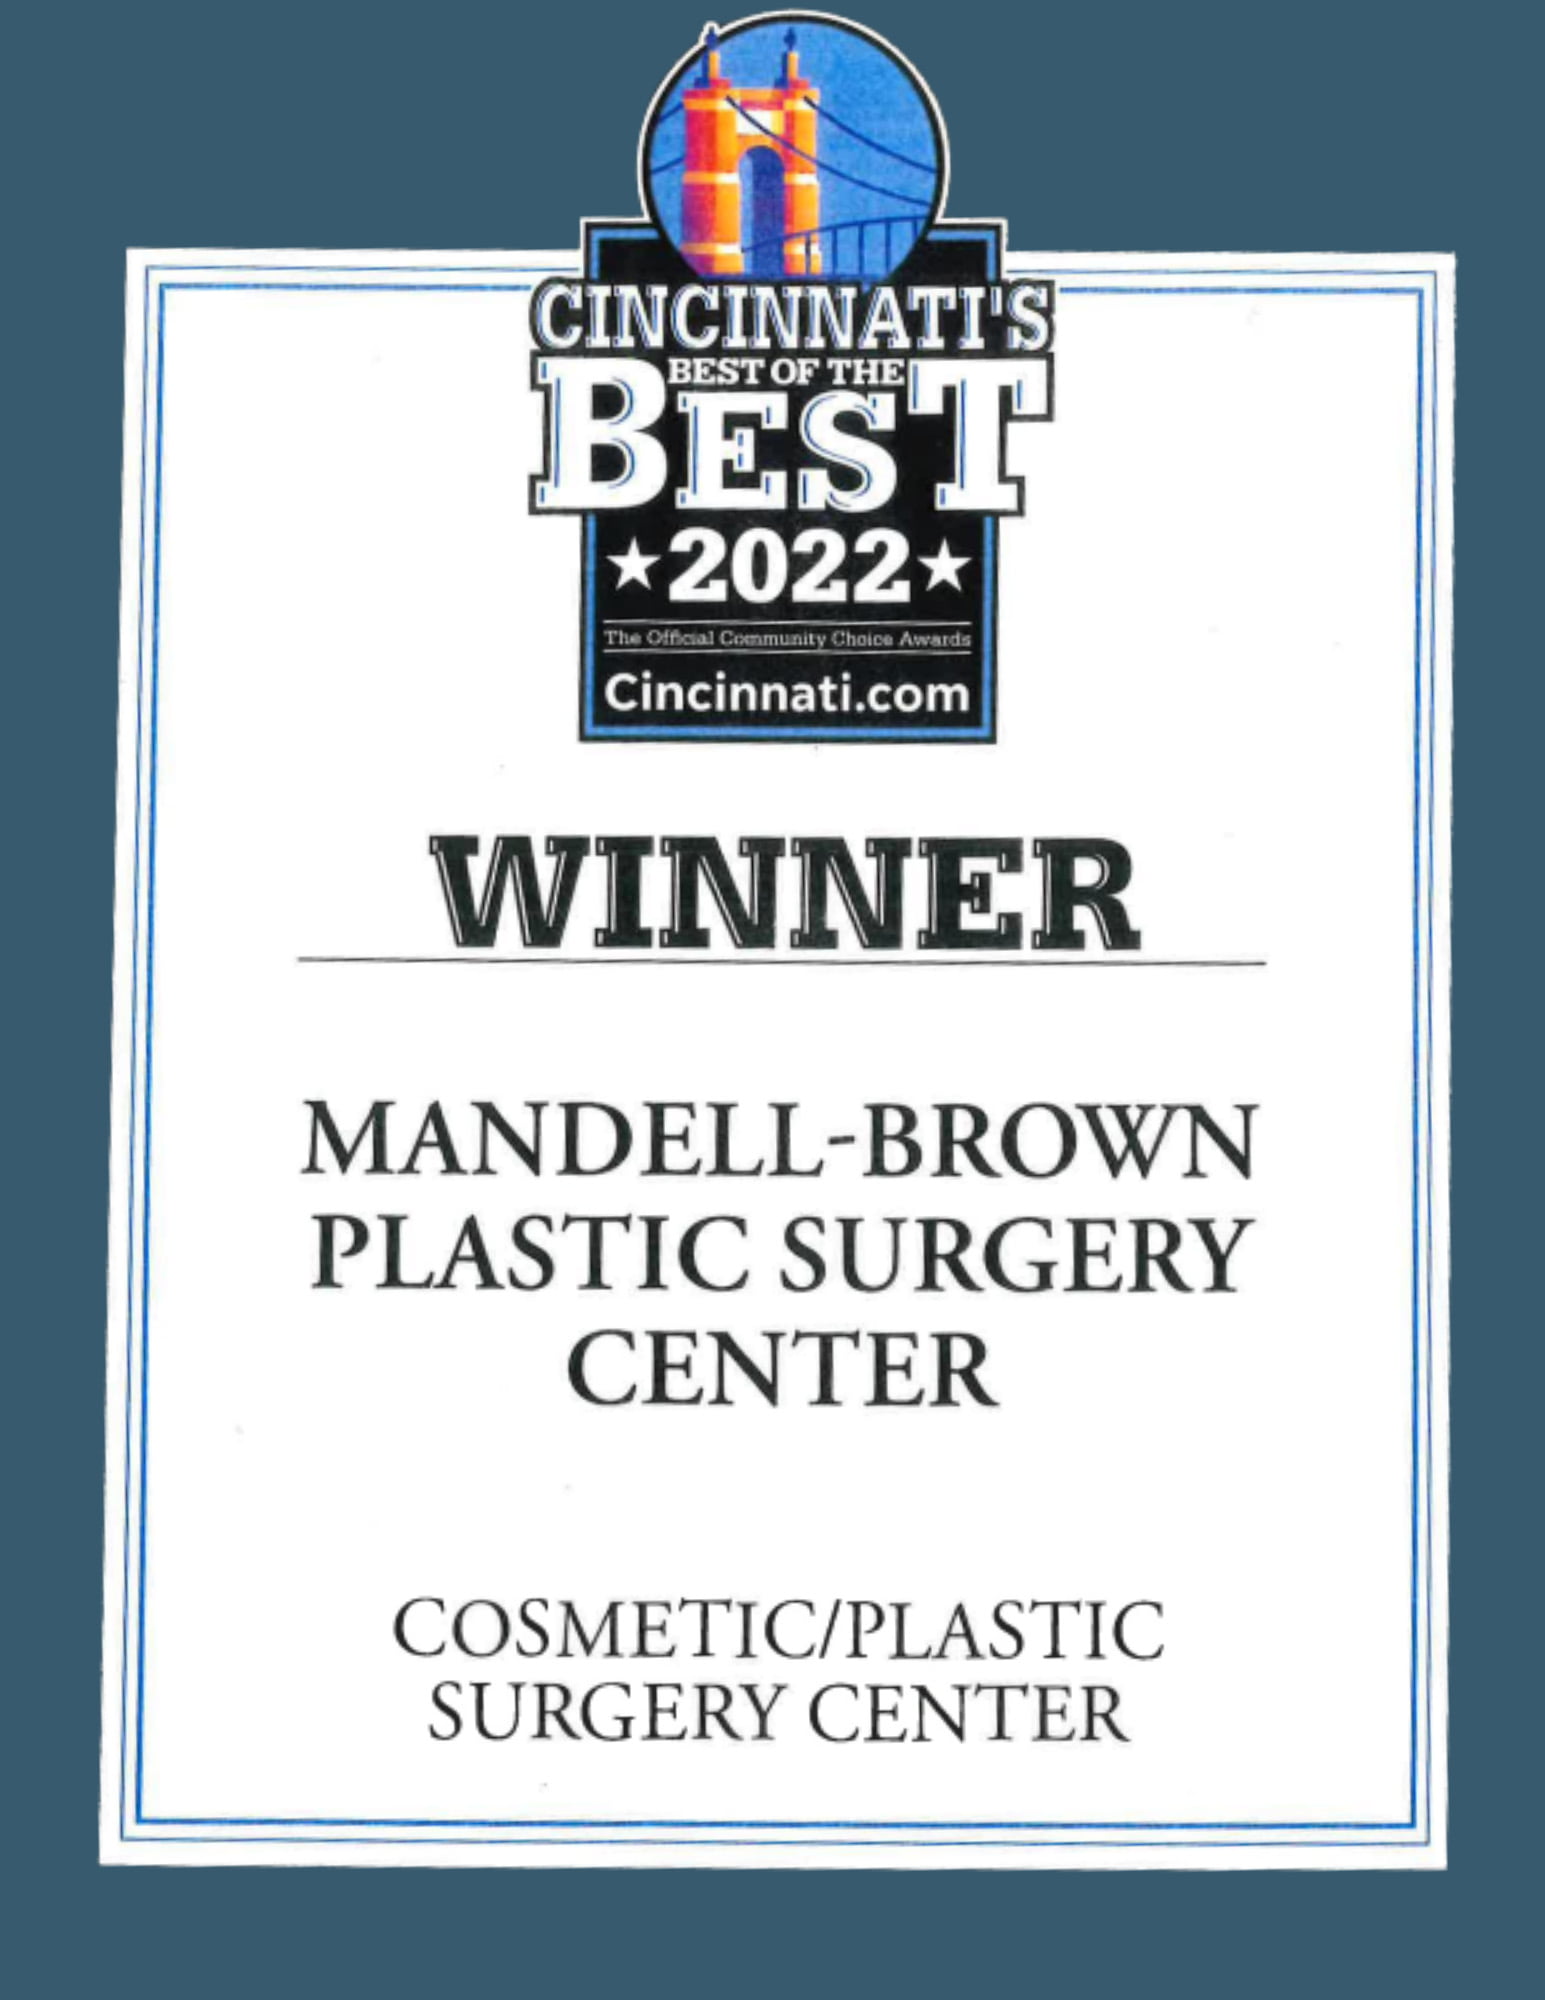 Cincinnati's Best of the Best 2022 Award for Cosmetic/Plastic Surgery Center